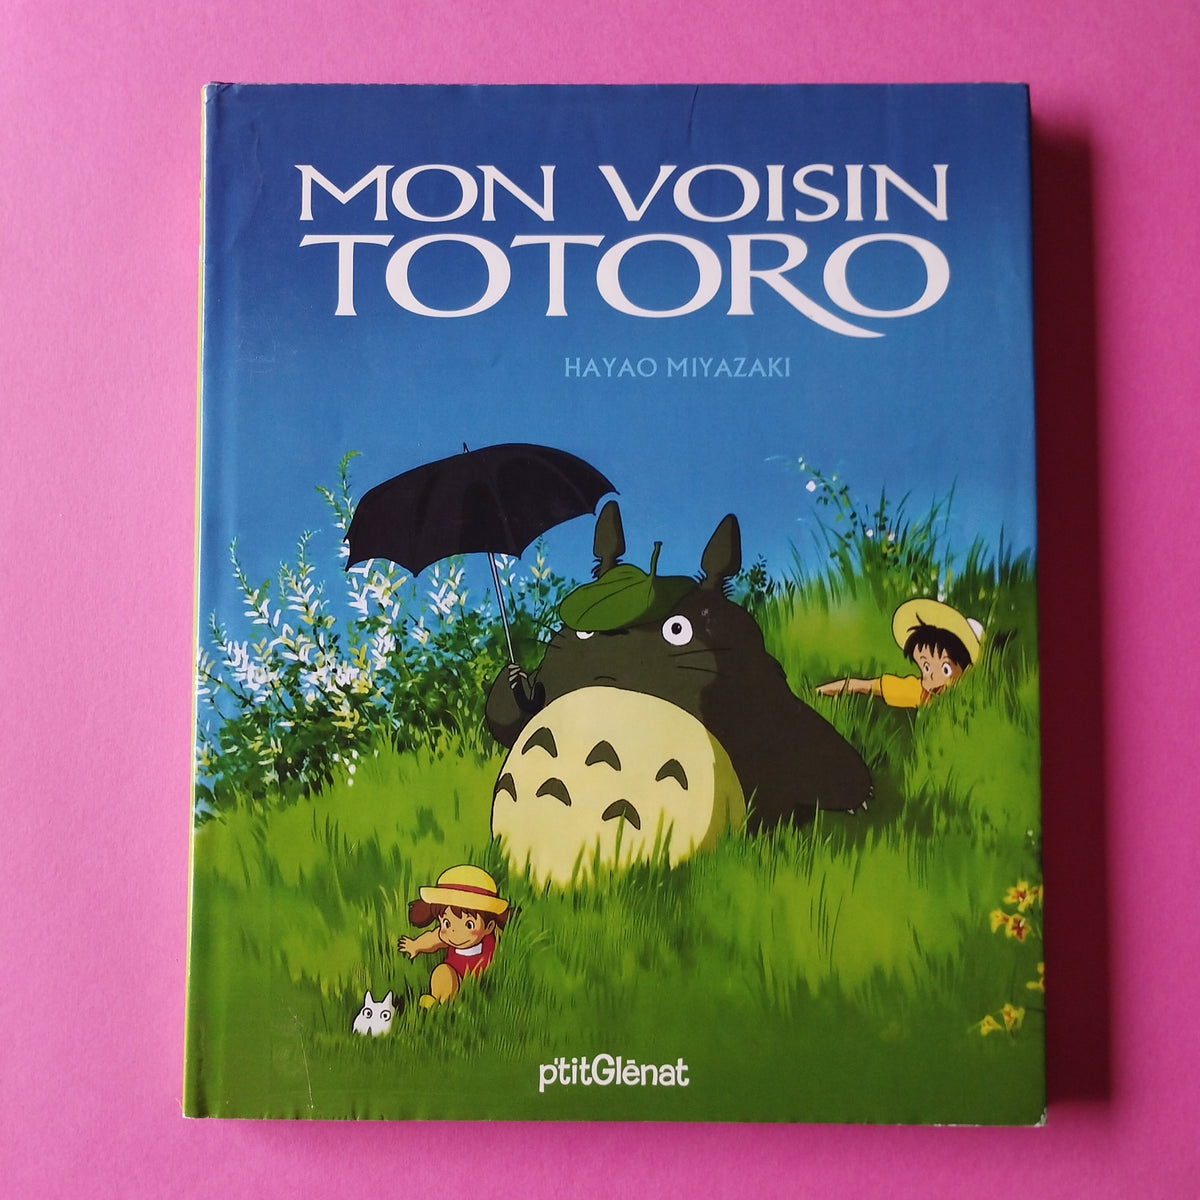 Livre : Quatre films de Hayao Miyazaki : Mon voisin Totoro, Porco